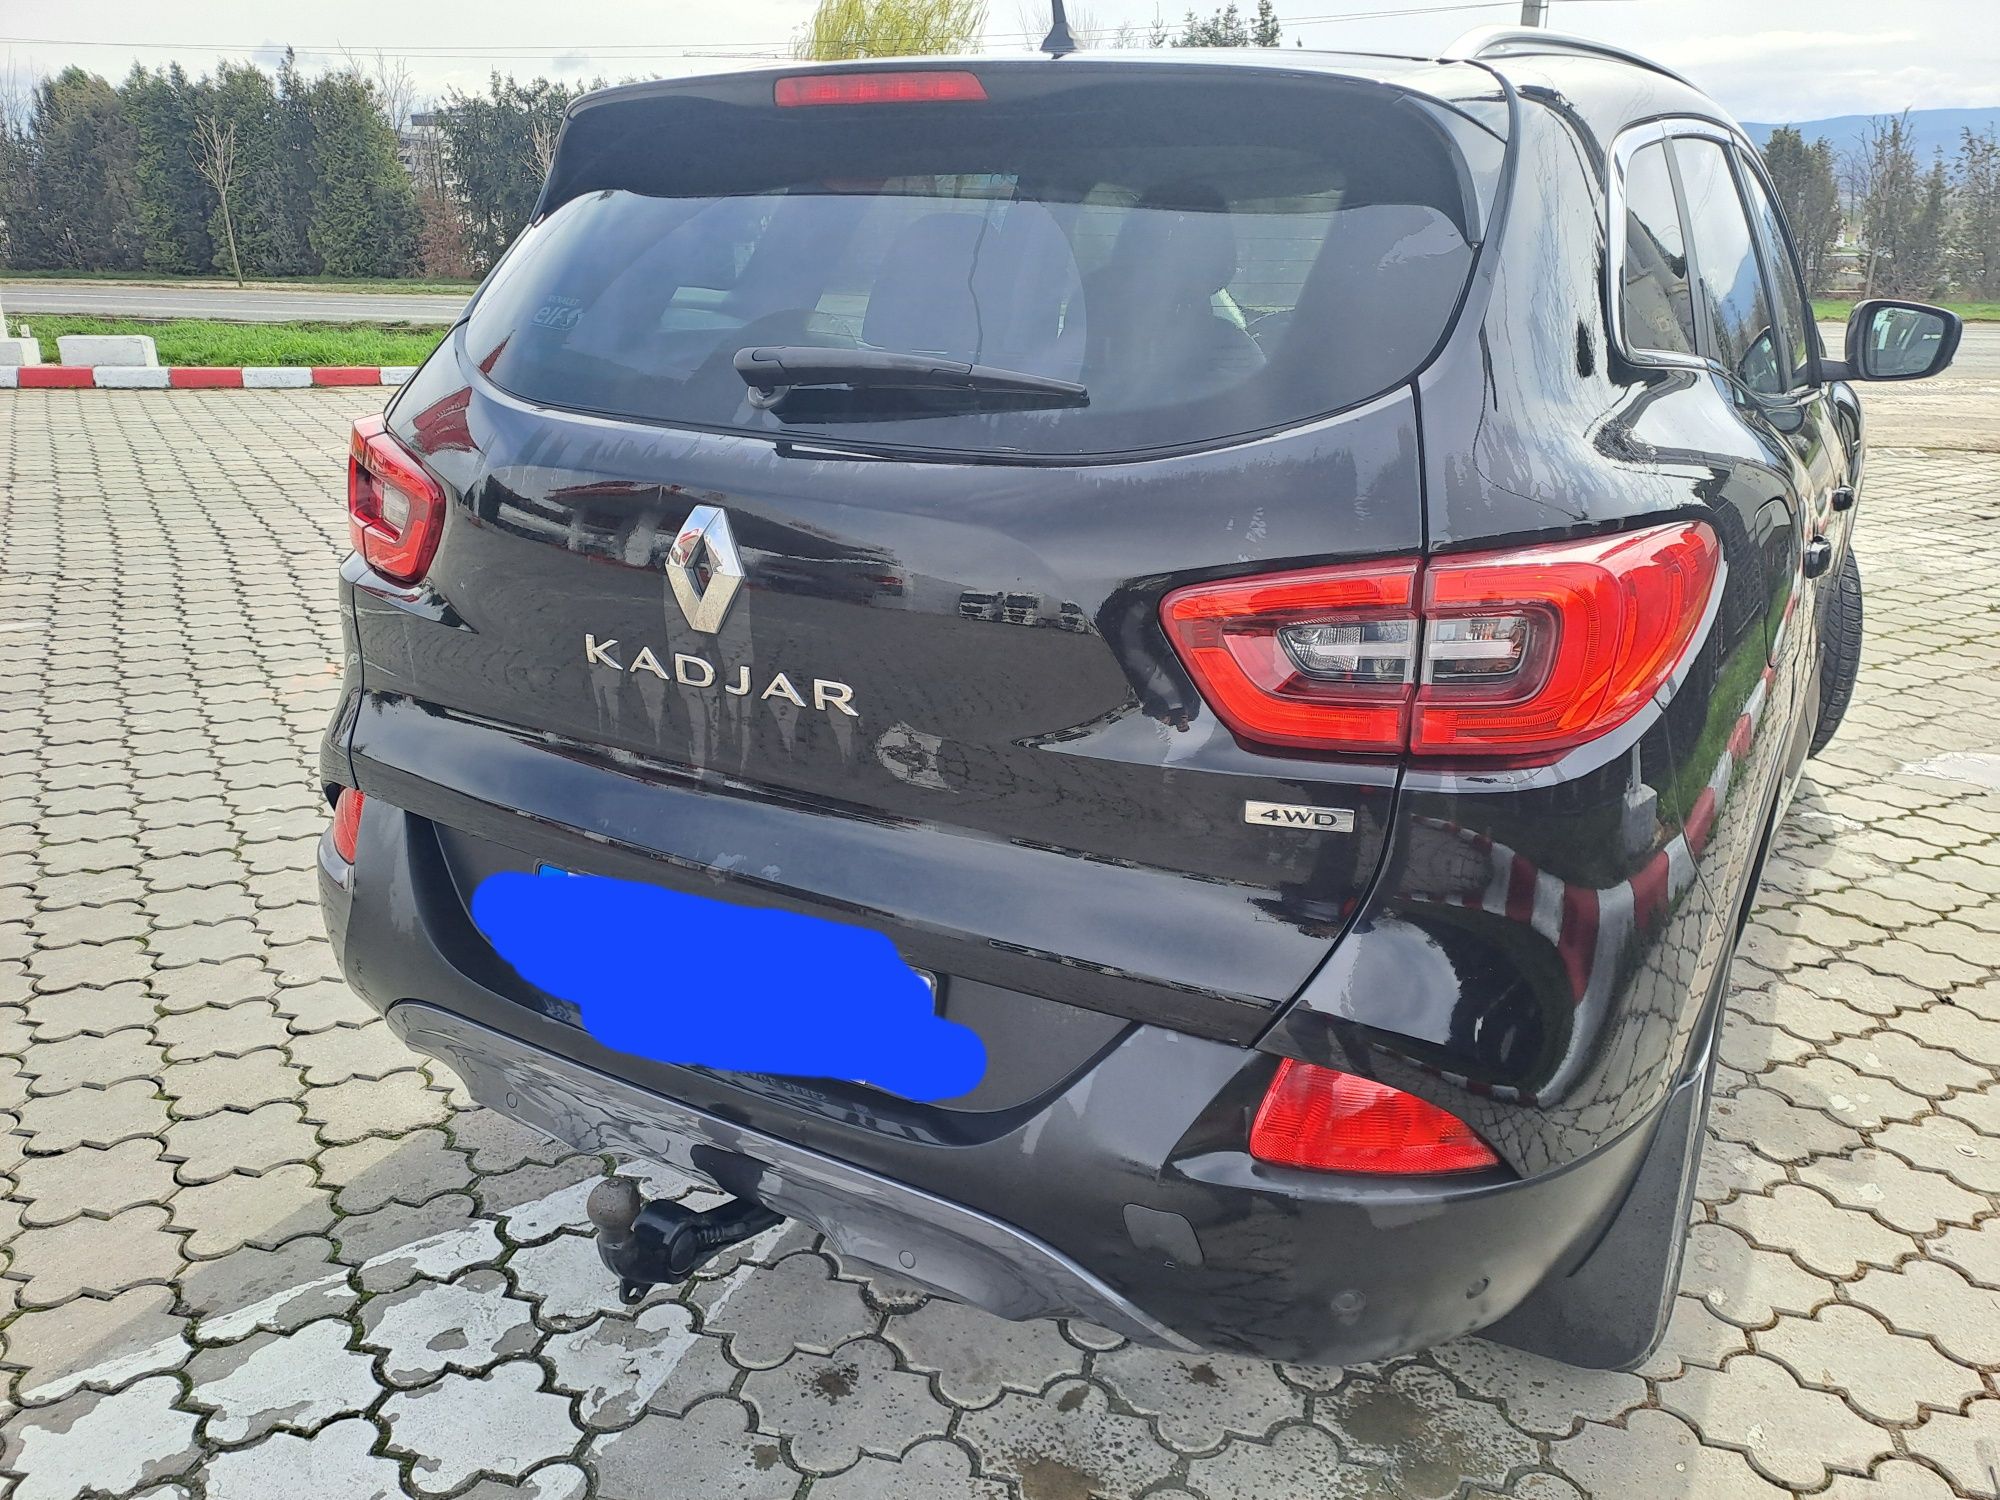 Vand Renault Kadjar Bose Edition 06/ 2015,euro 6 fara adblue, 1.6 Dci